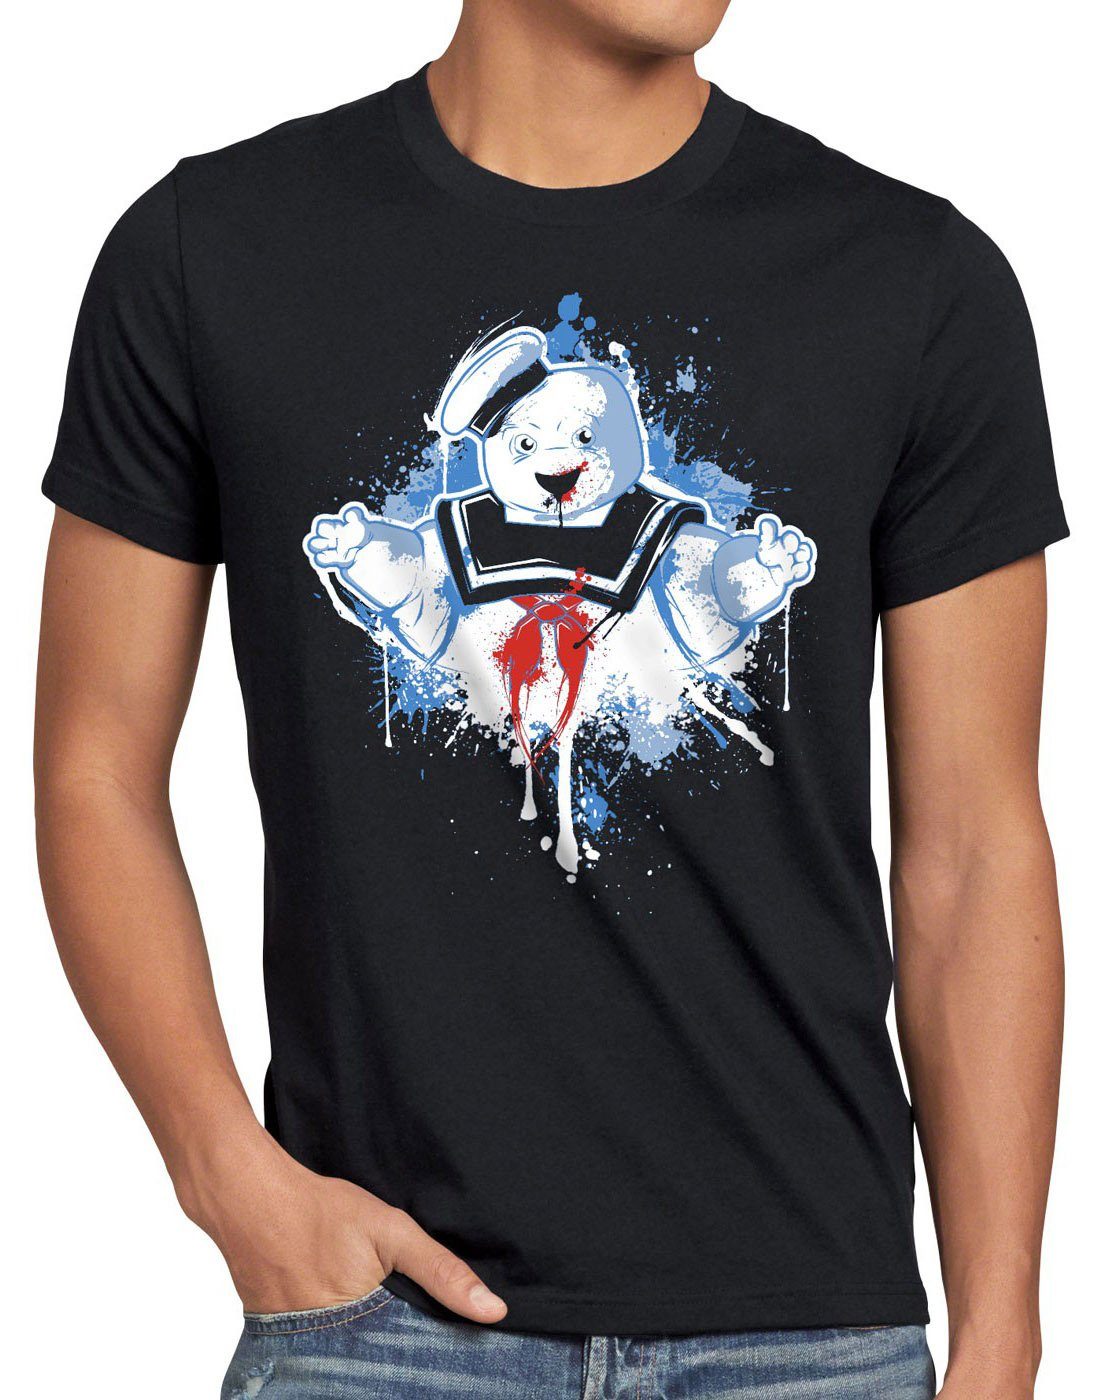 kino Marshmallow T-Shirt style3 schaumzucker geisterjäger Herren schwarz ghostbusters Print-Shirt